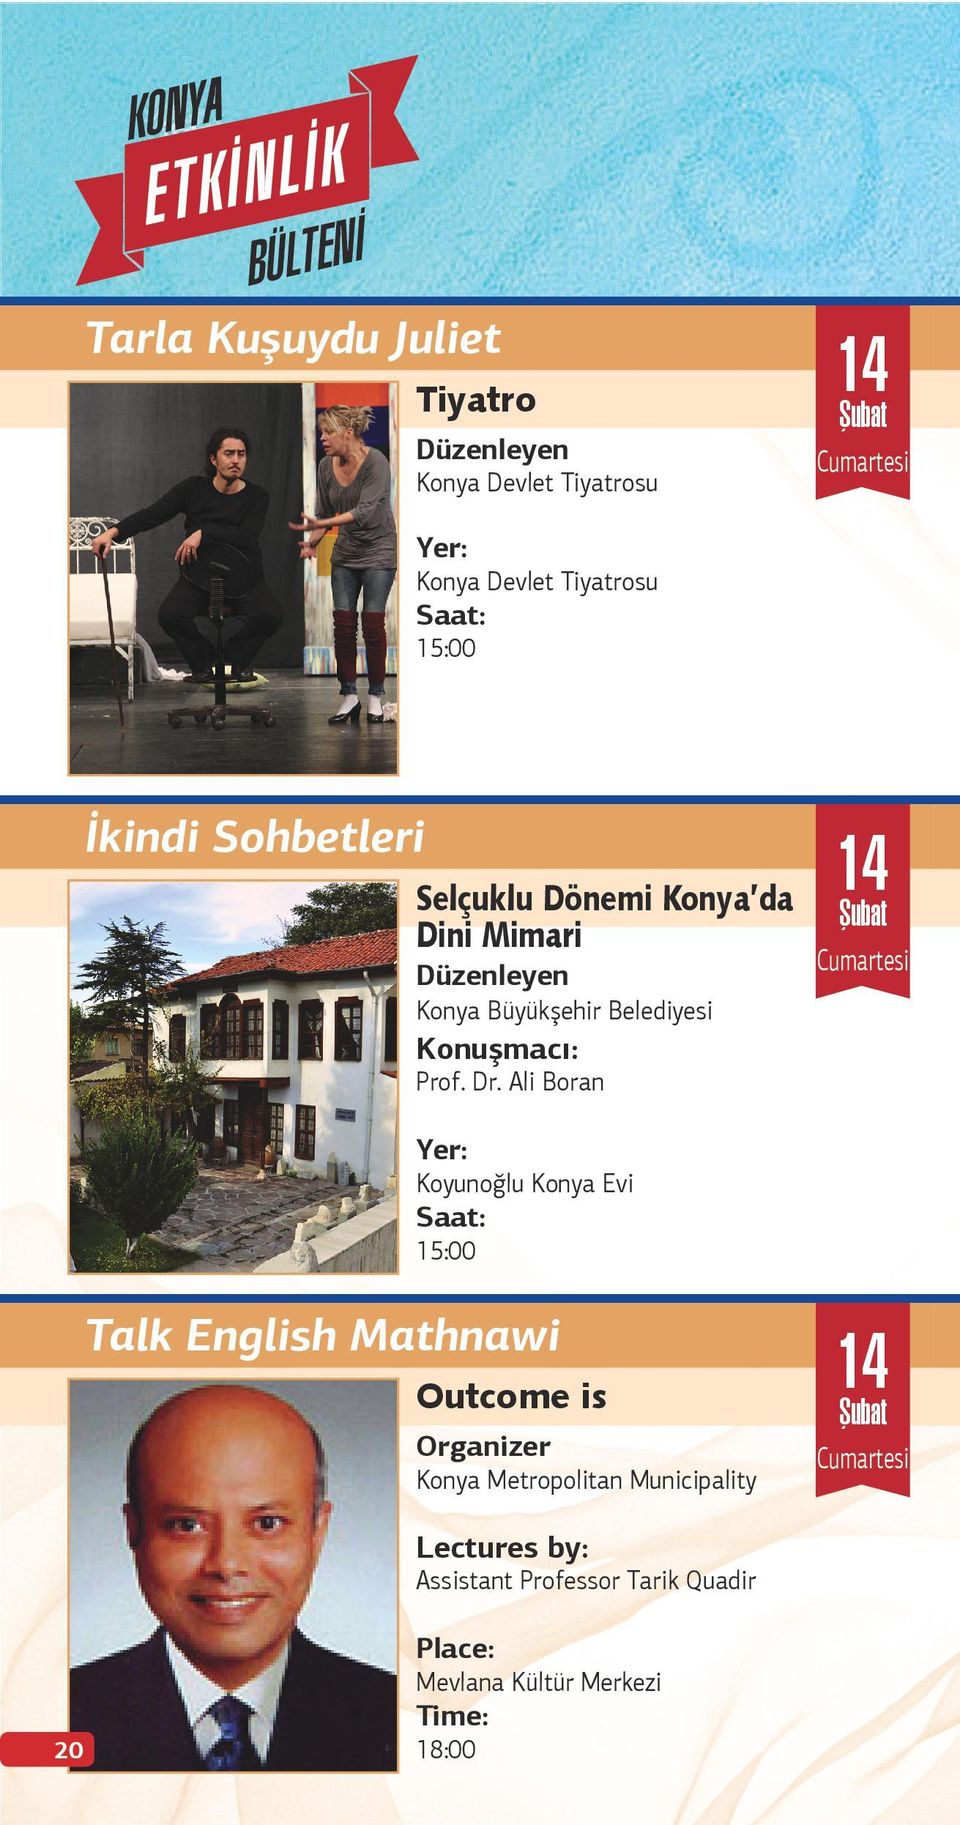 Ali Boran Koyunoğlu Konya Evi 15:00 Talk English Mathnawi Outcome is Organizer Konya